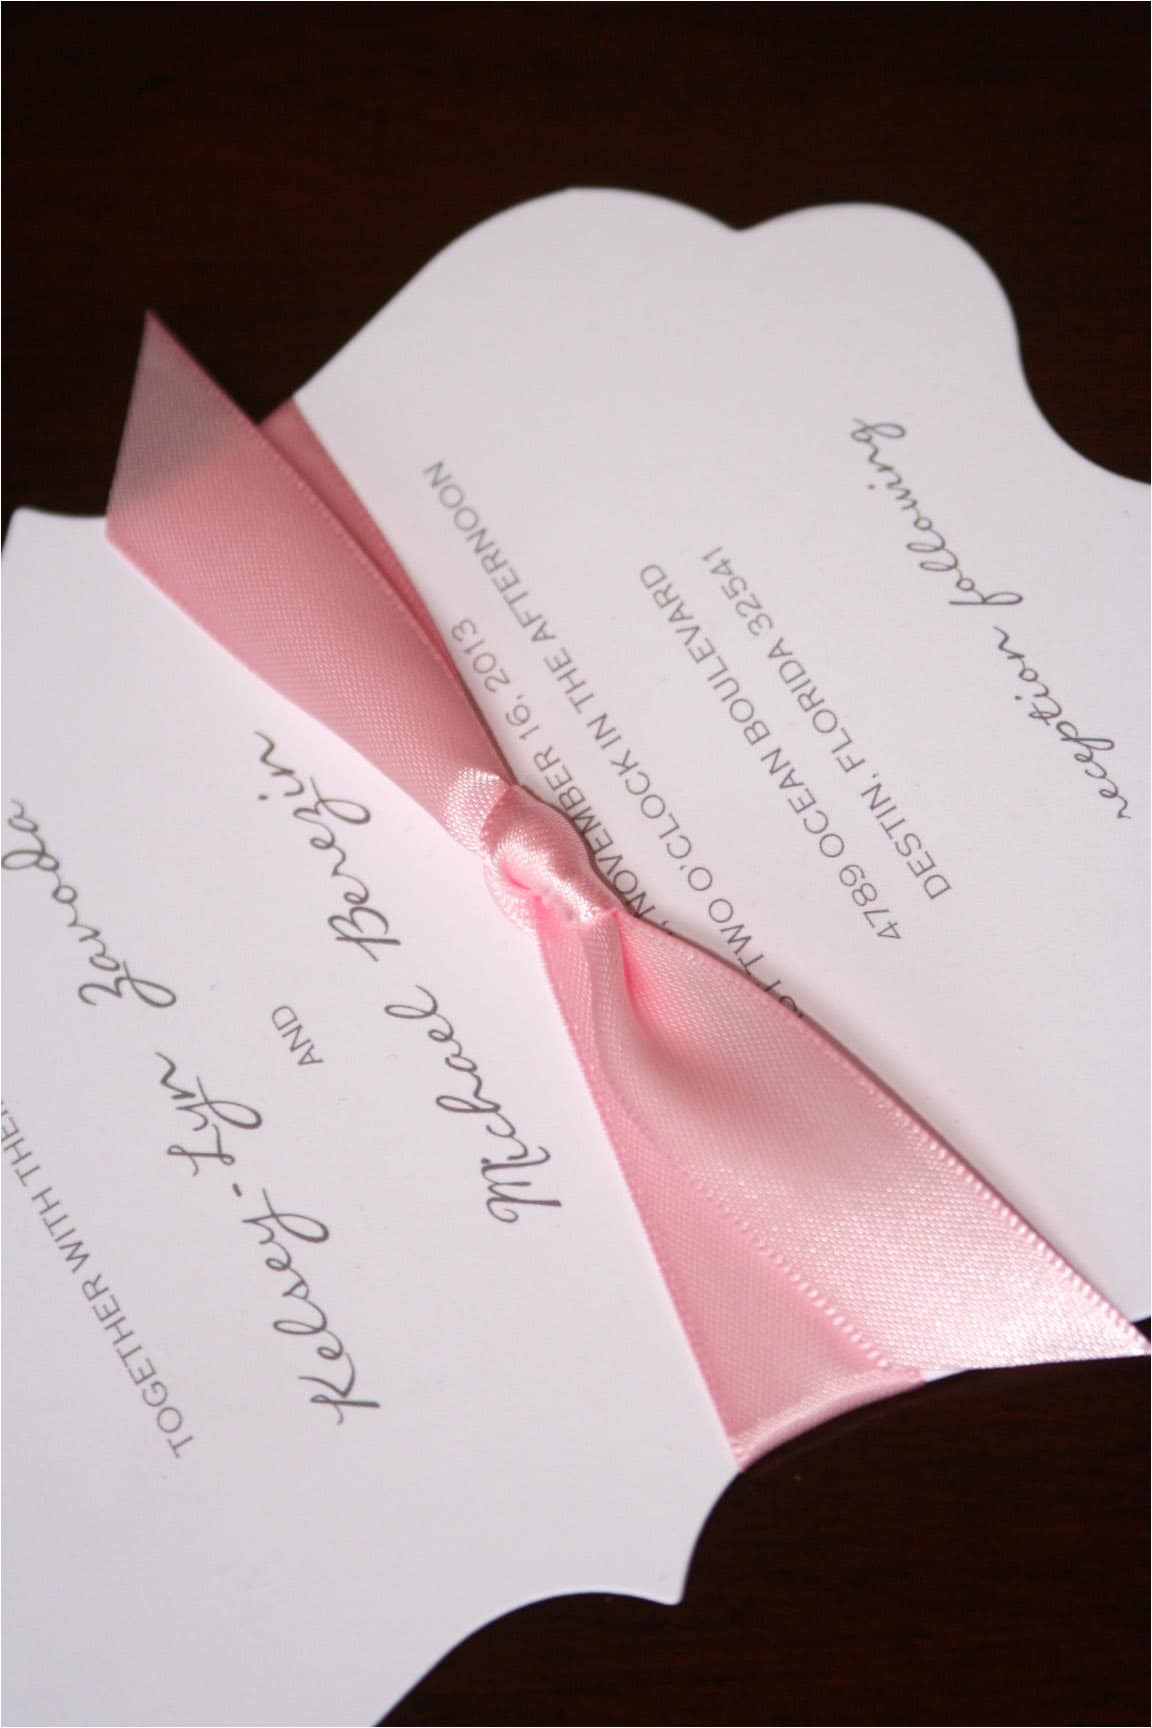 die cut wedding invitations